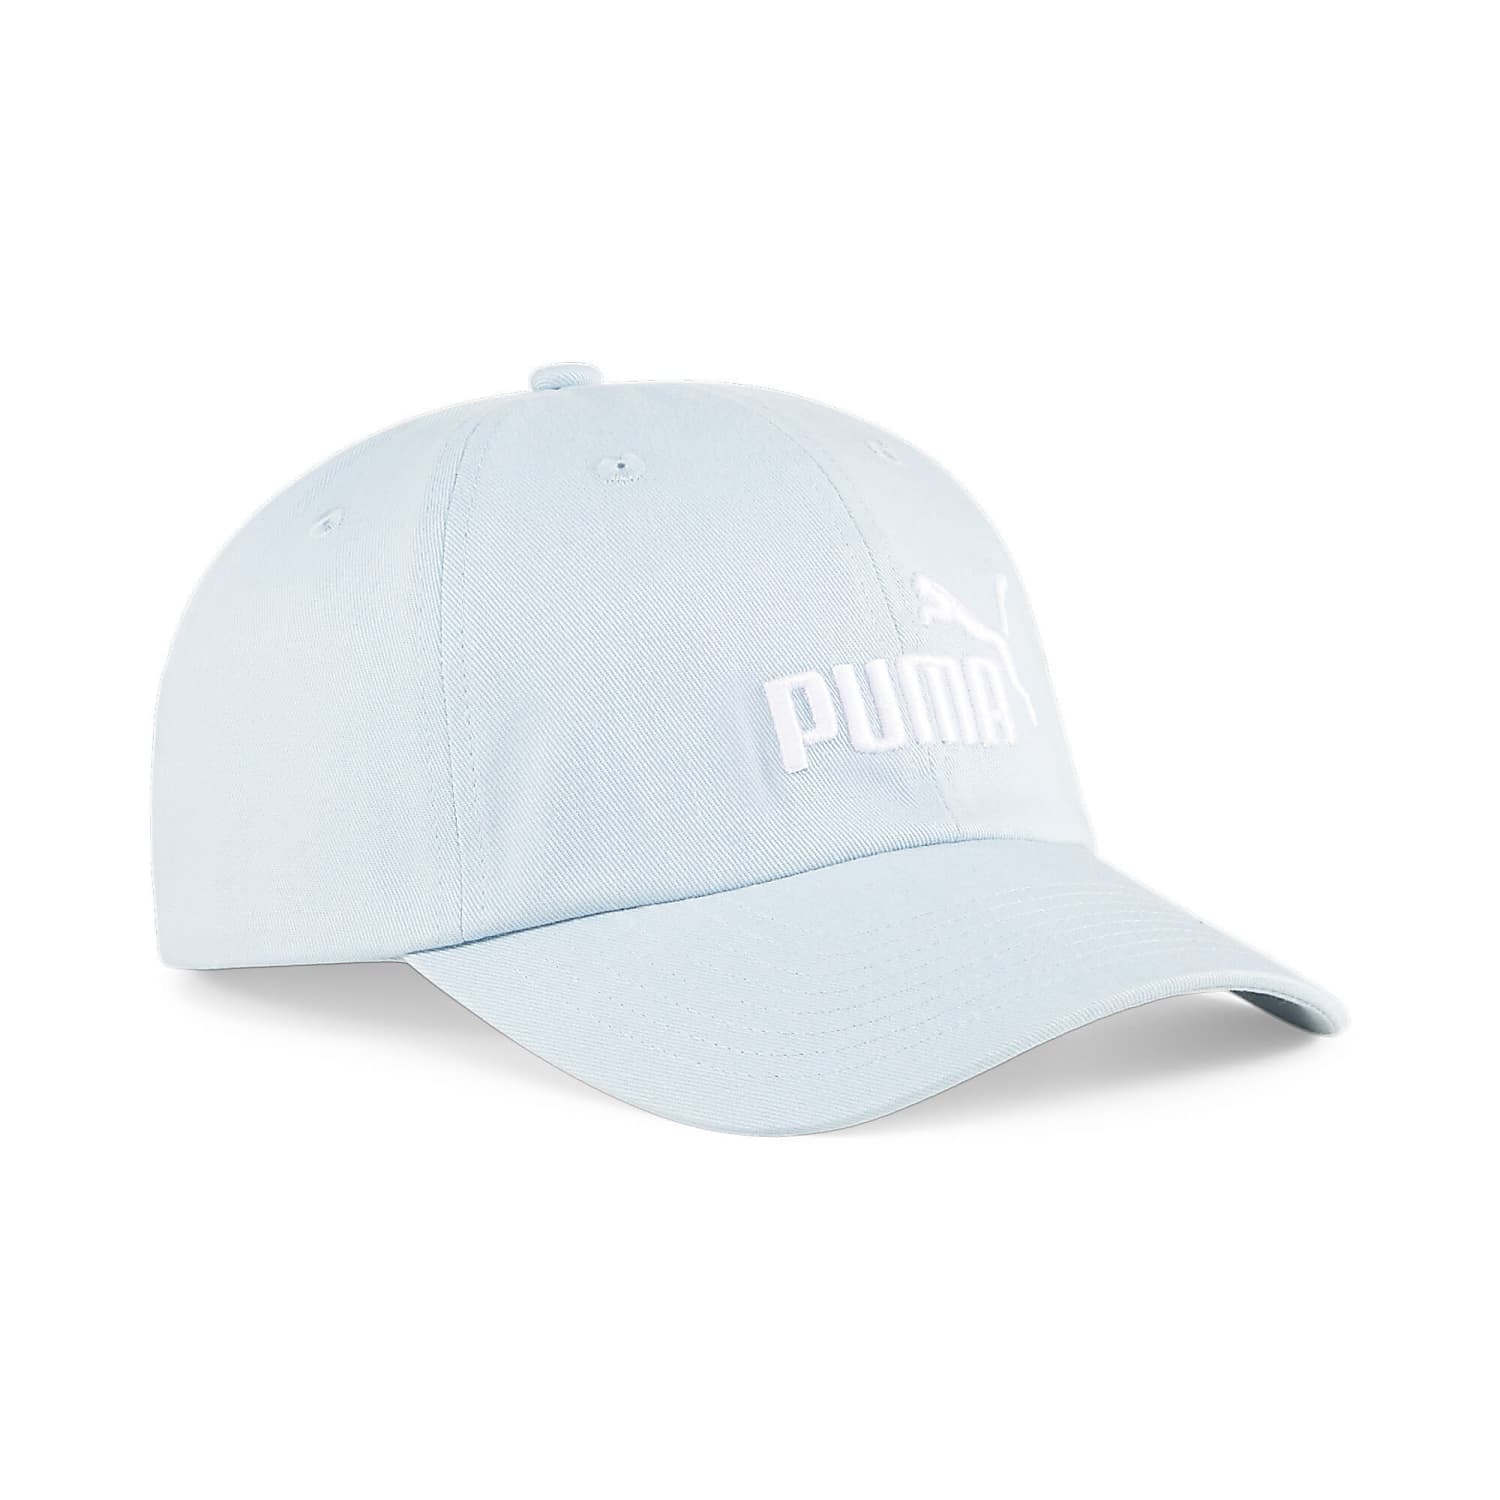 PUMA CAP, online Buy now BB Puma NO.1 Surf ESS Turquoise